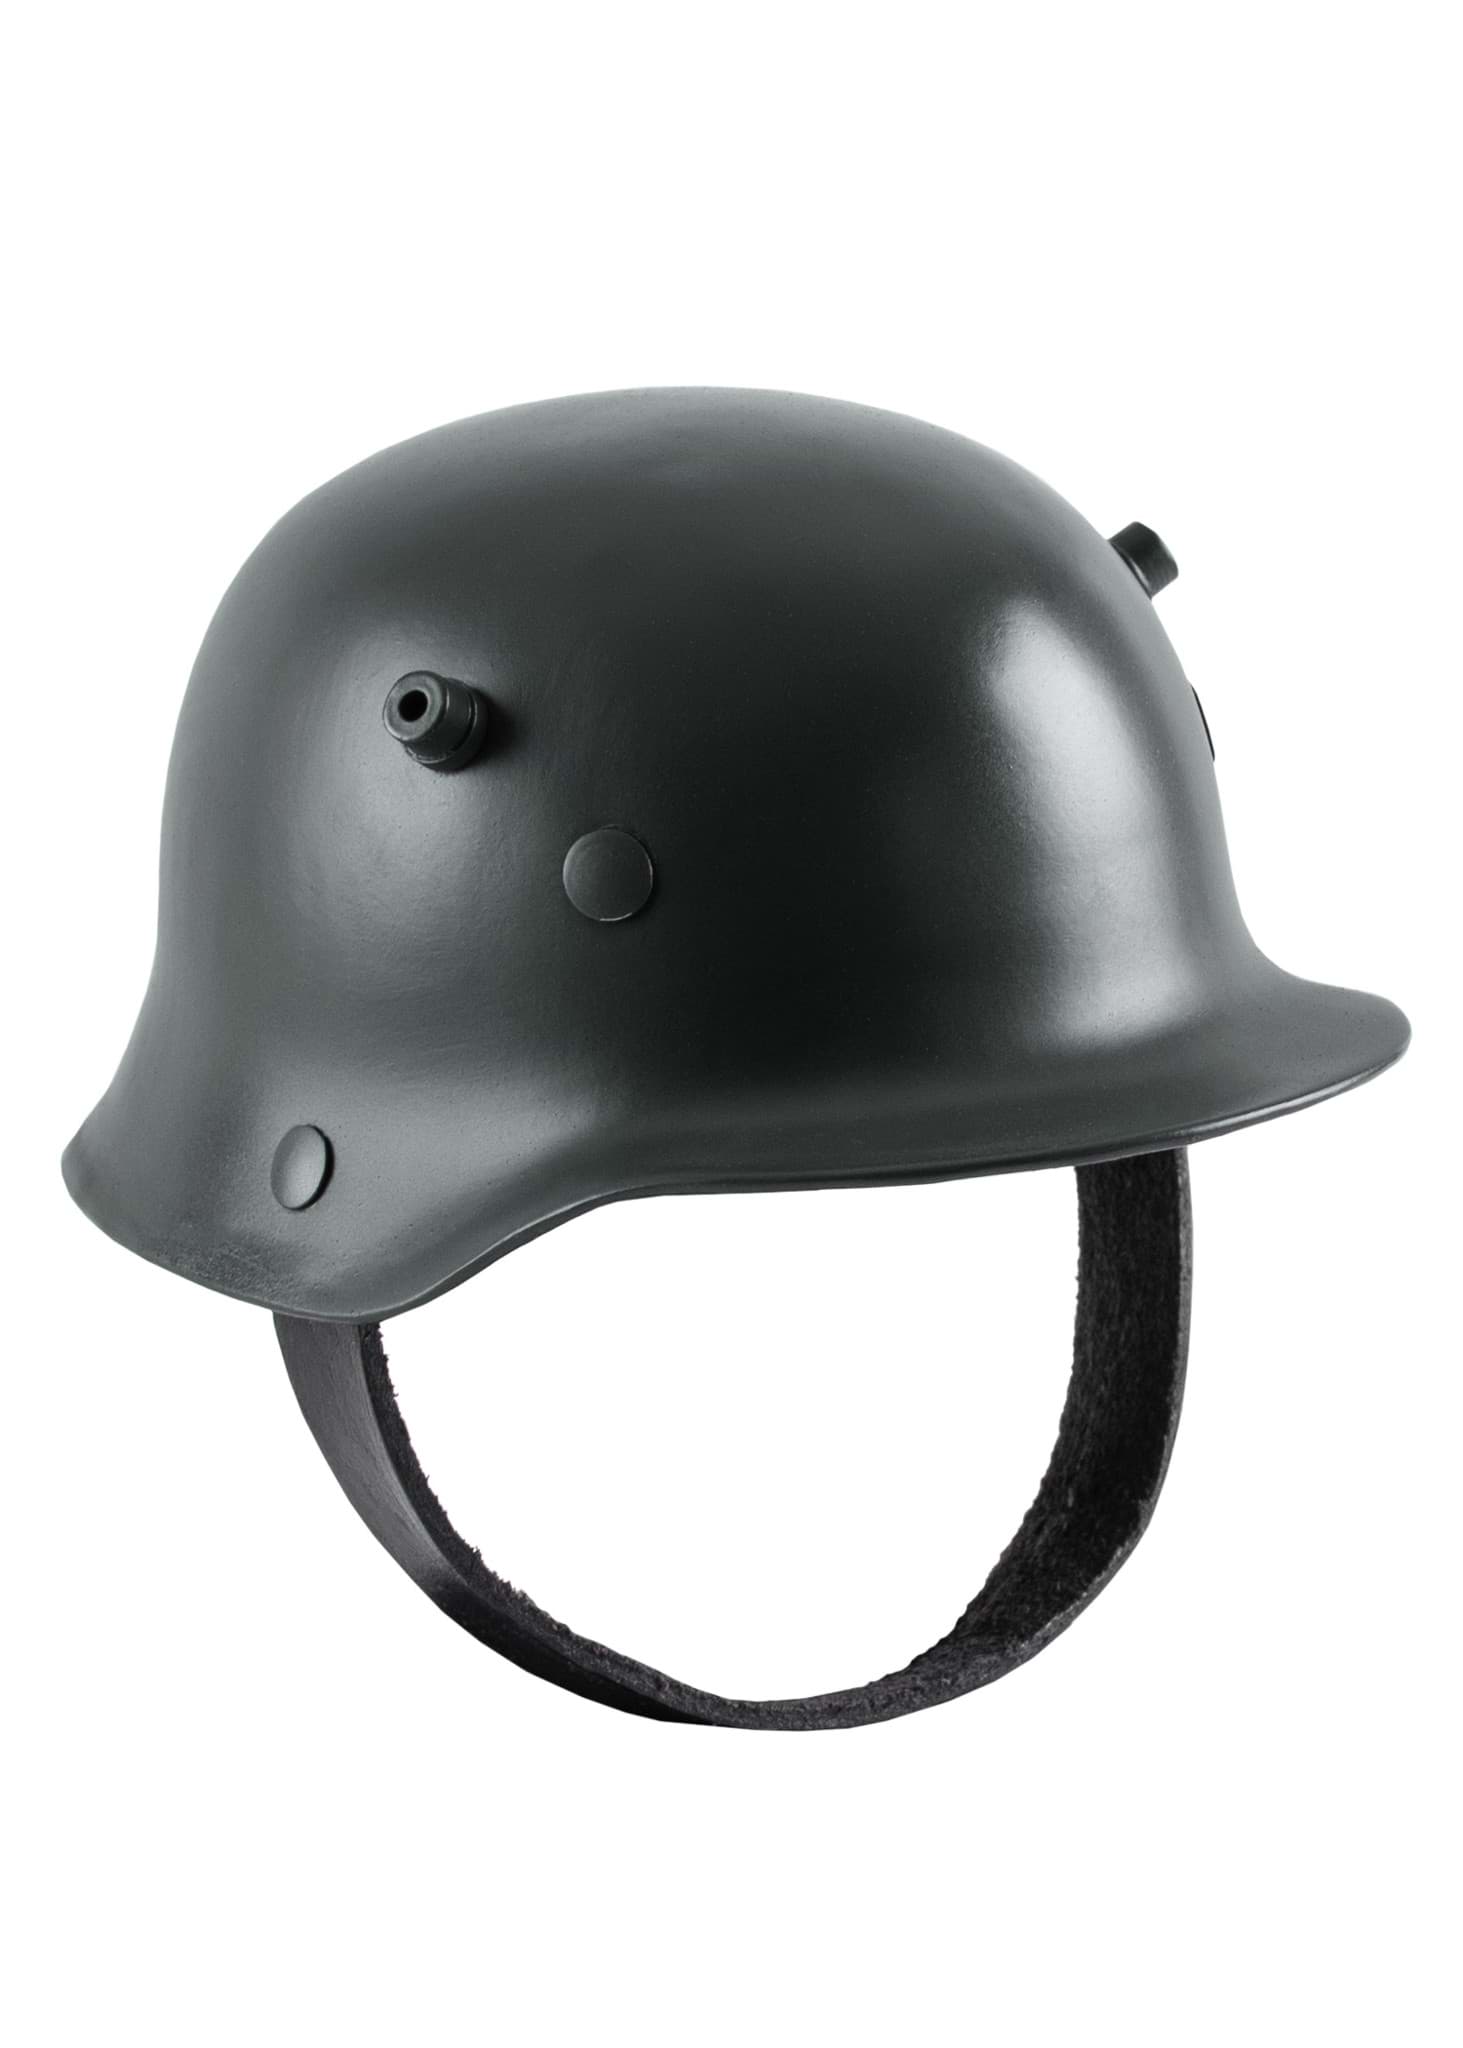 Picture of Battle Merchant - Miniature German Steel Helmet M16 with Stand